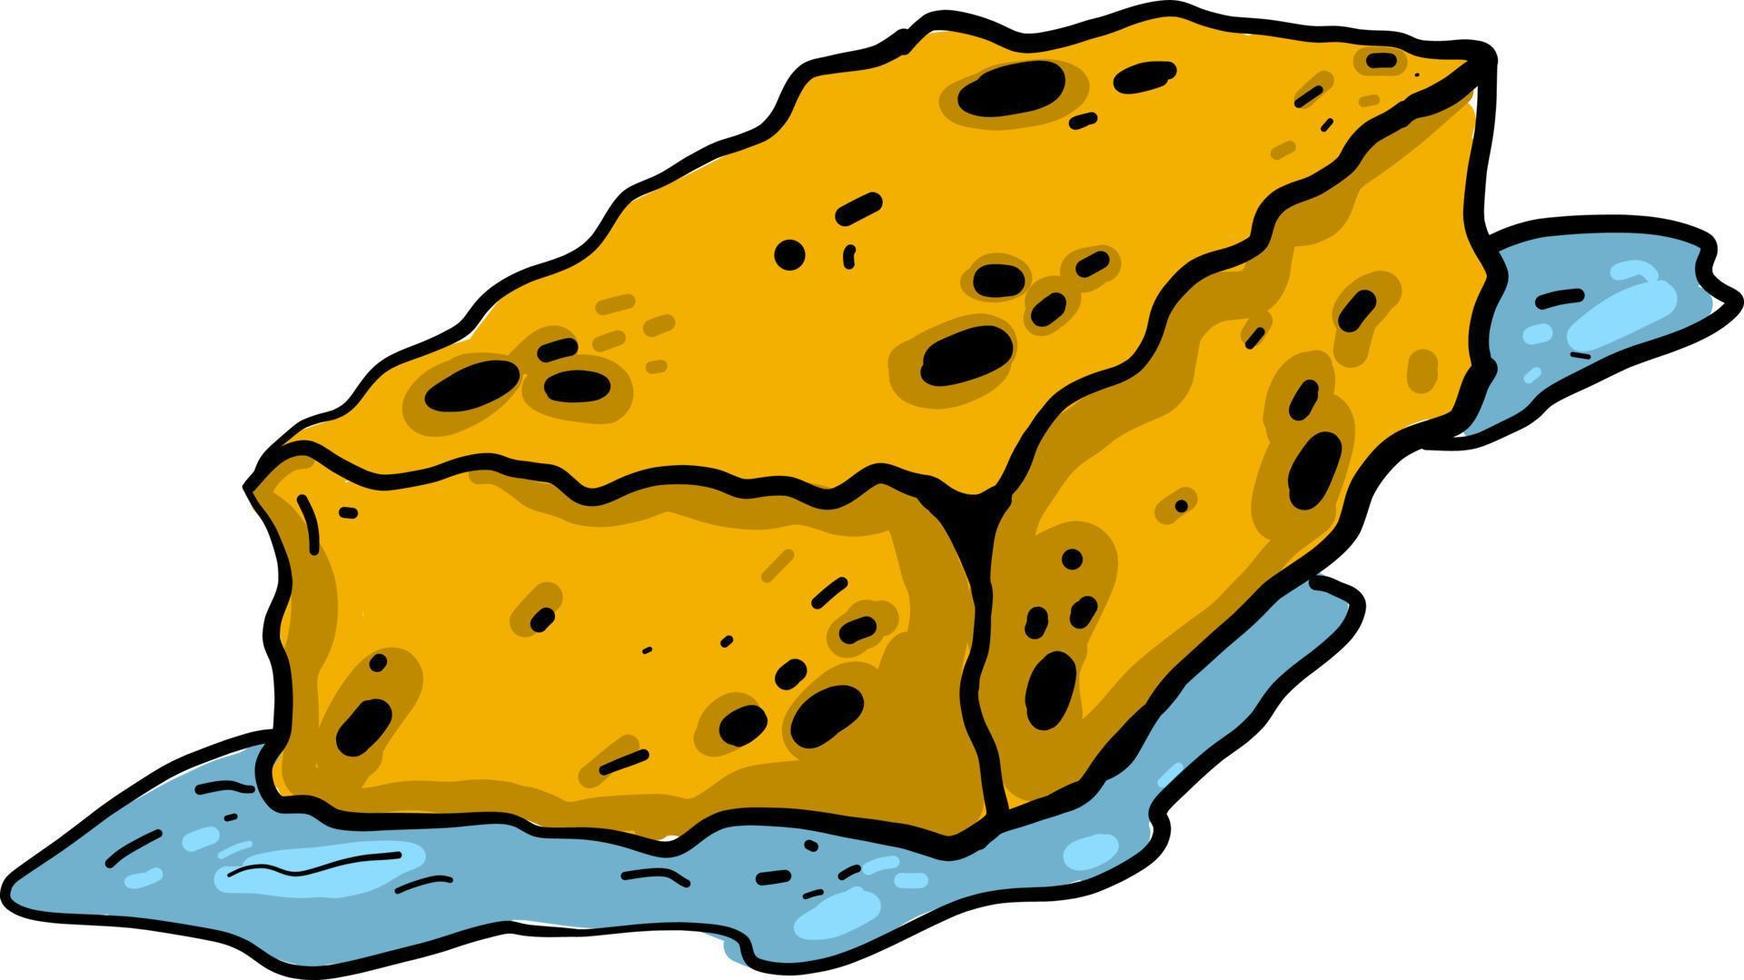 Yellow sponge, illustration, vector on white background